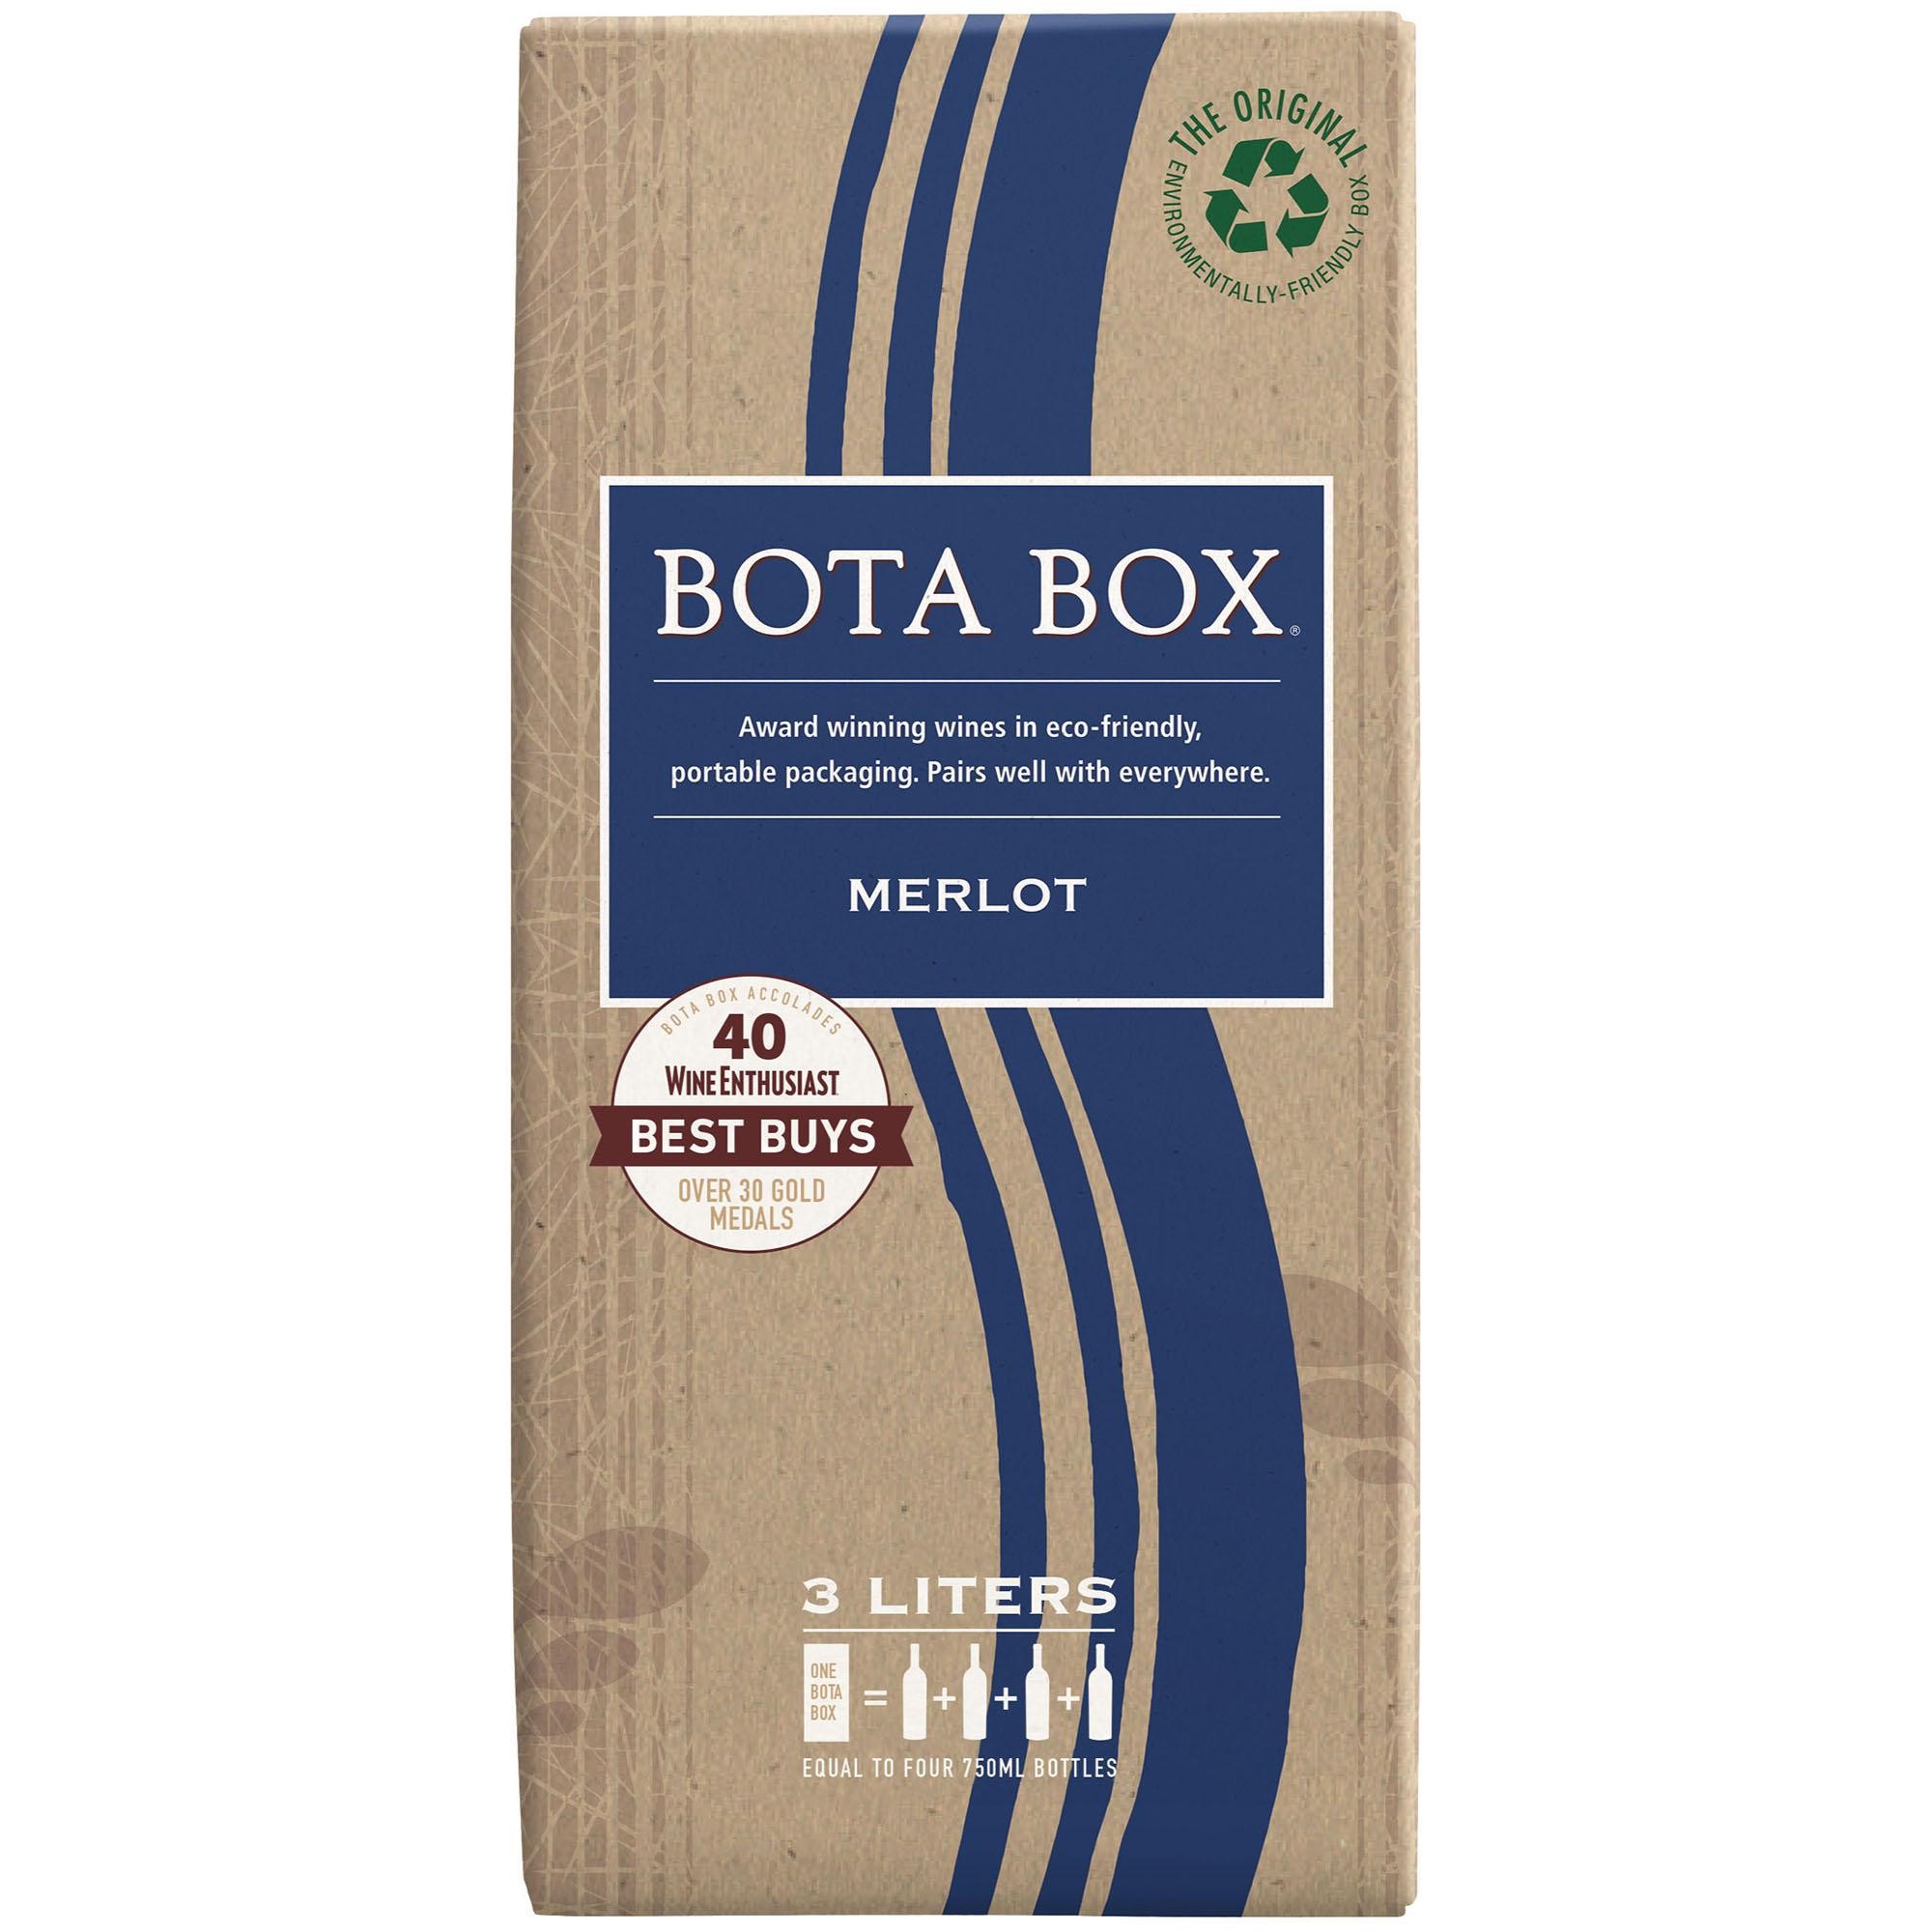 Bota Box Merlot - California - 3l Box